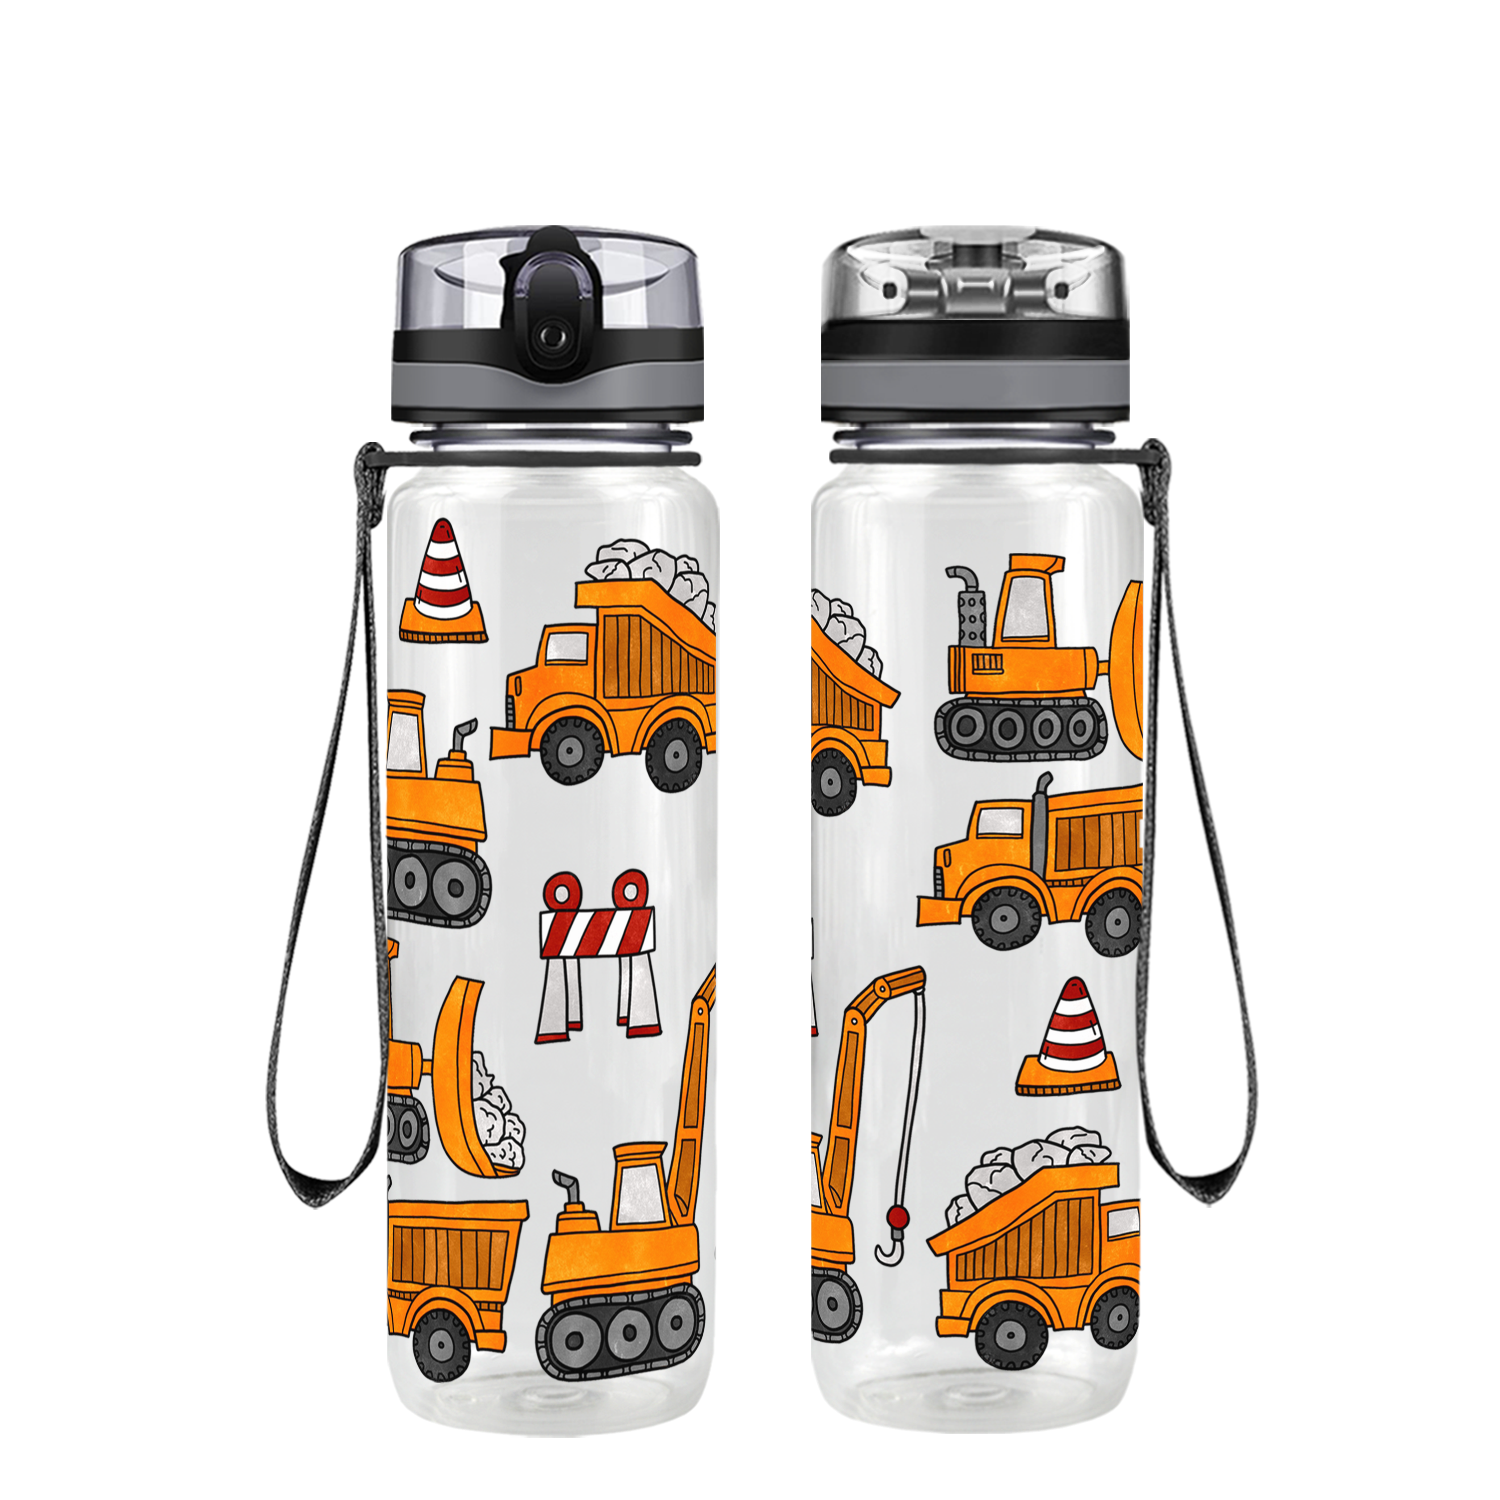 Toy Trucks on 20 oz Motivational Tracking Water Bottle